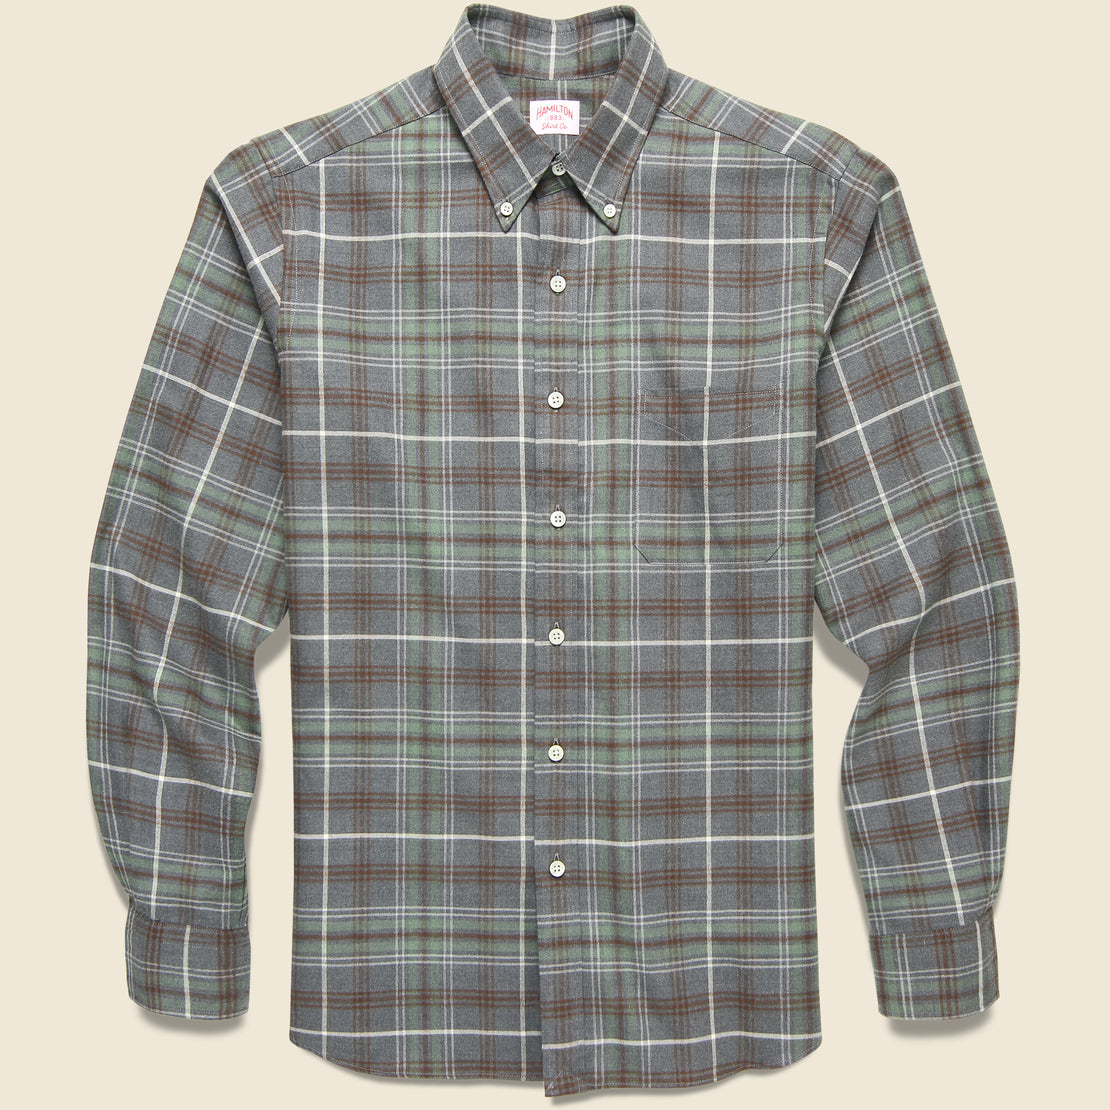 Hamilton Shirt Co. Brushed Plaid Shirt - Moss/Brown/Ecru